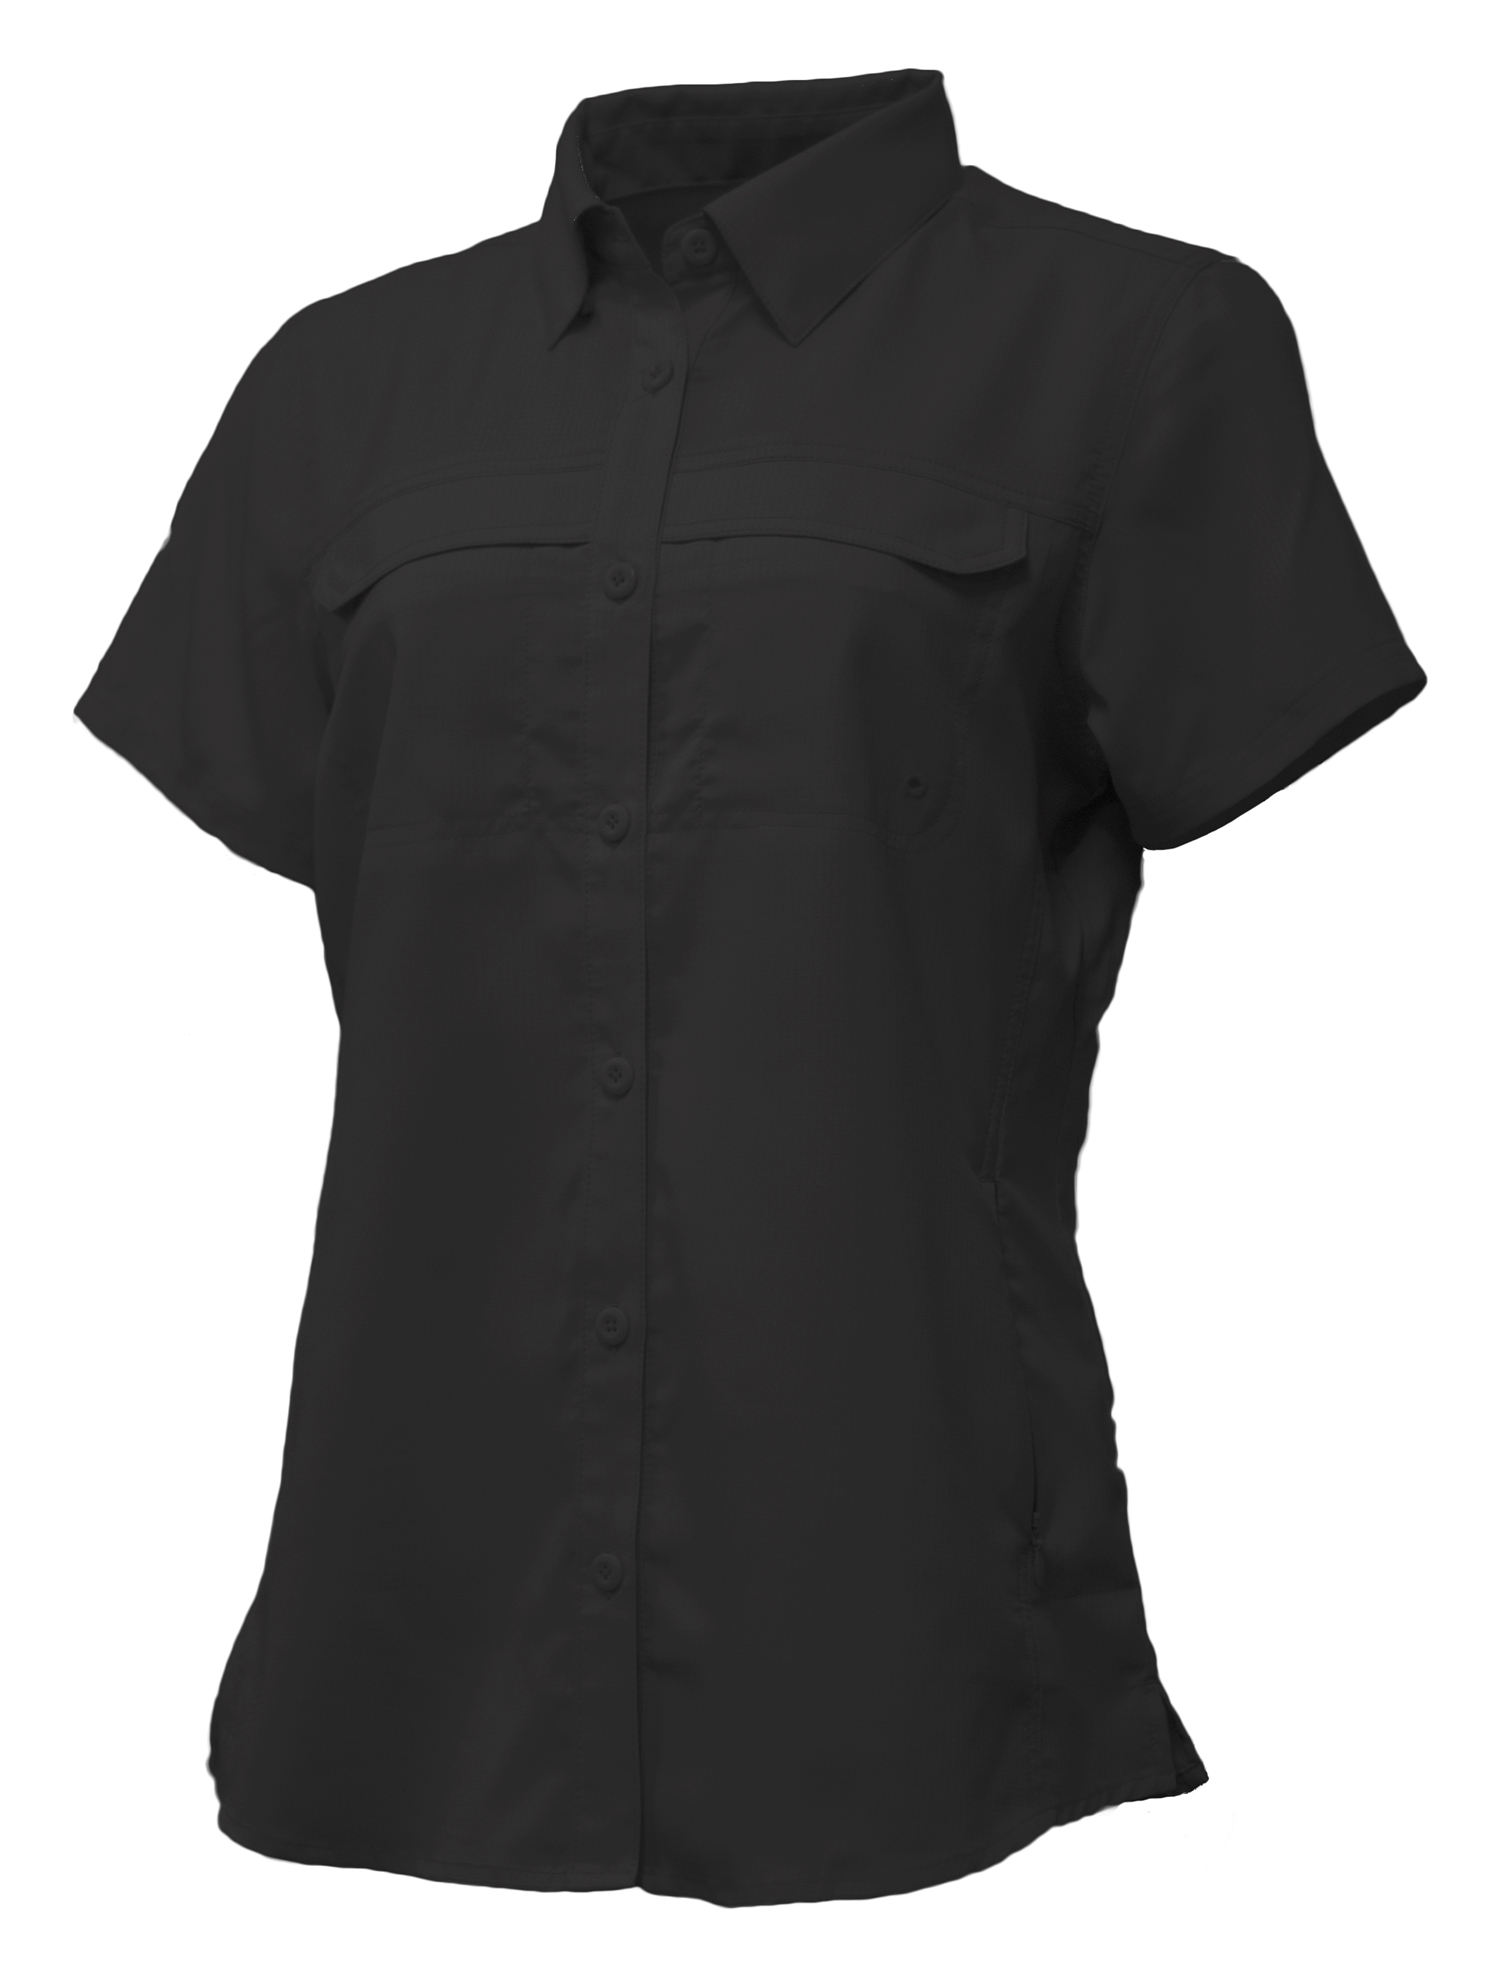 https://www.nyfifth.com/category/20220718/baw-athletic-wear-3101-ladies-short-sleeve-fishing-shirt_BLACK.jpeg